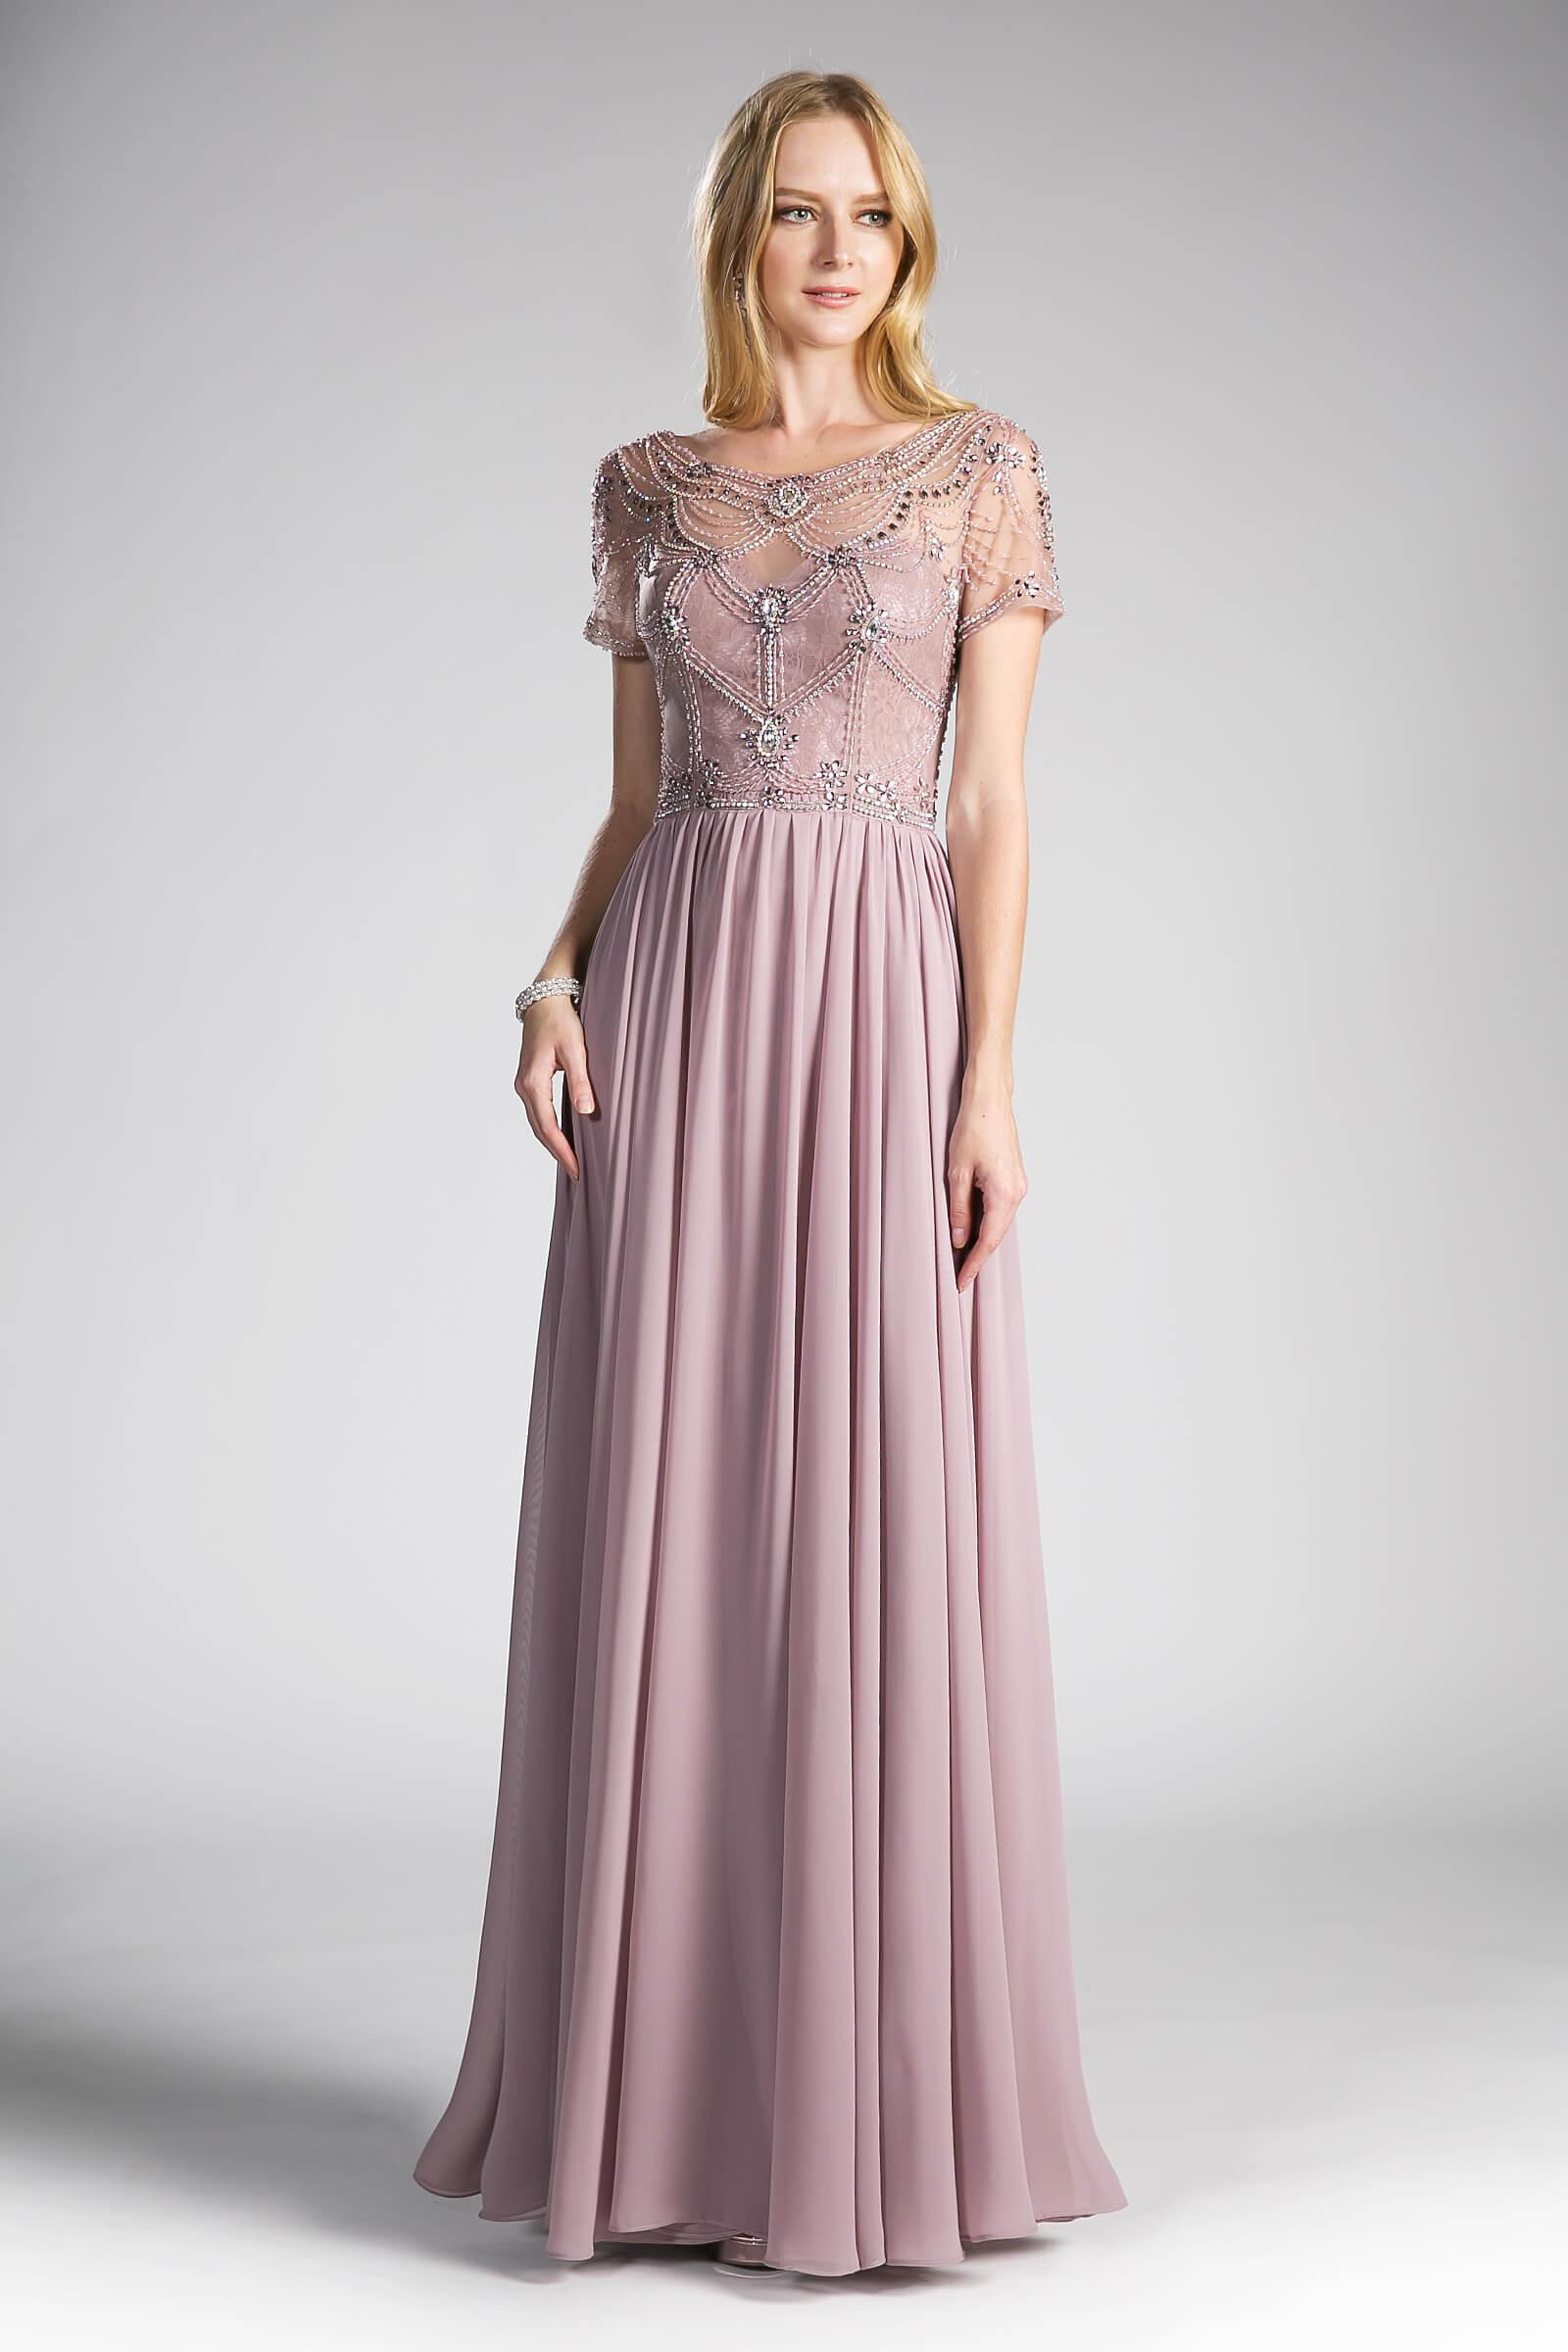 Cinderella Divine CD0123 Long Dress Formal Evening Gown | The Dress Outlet